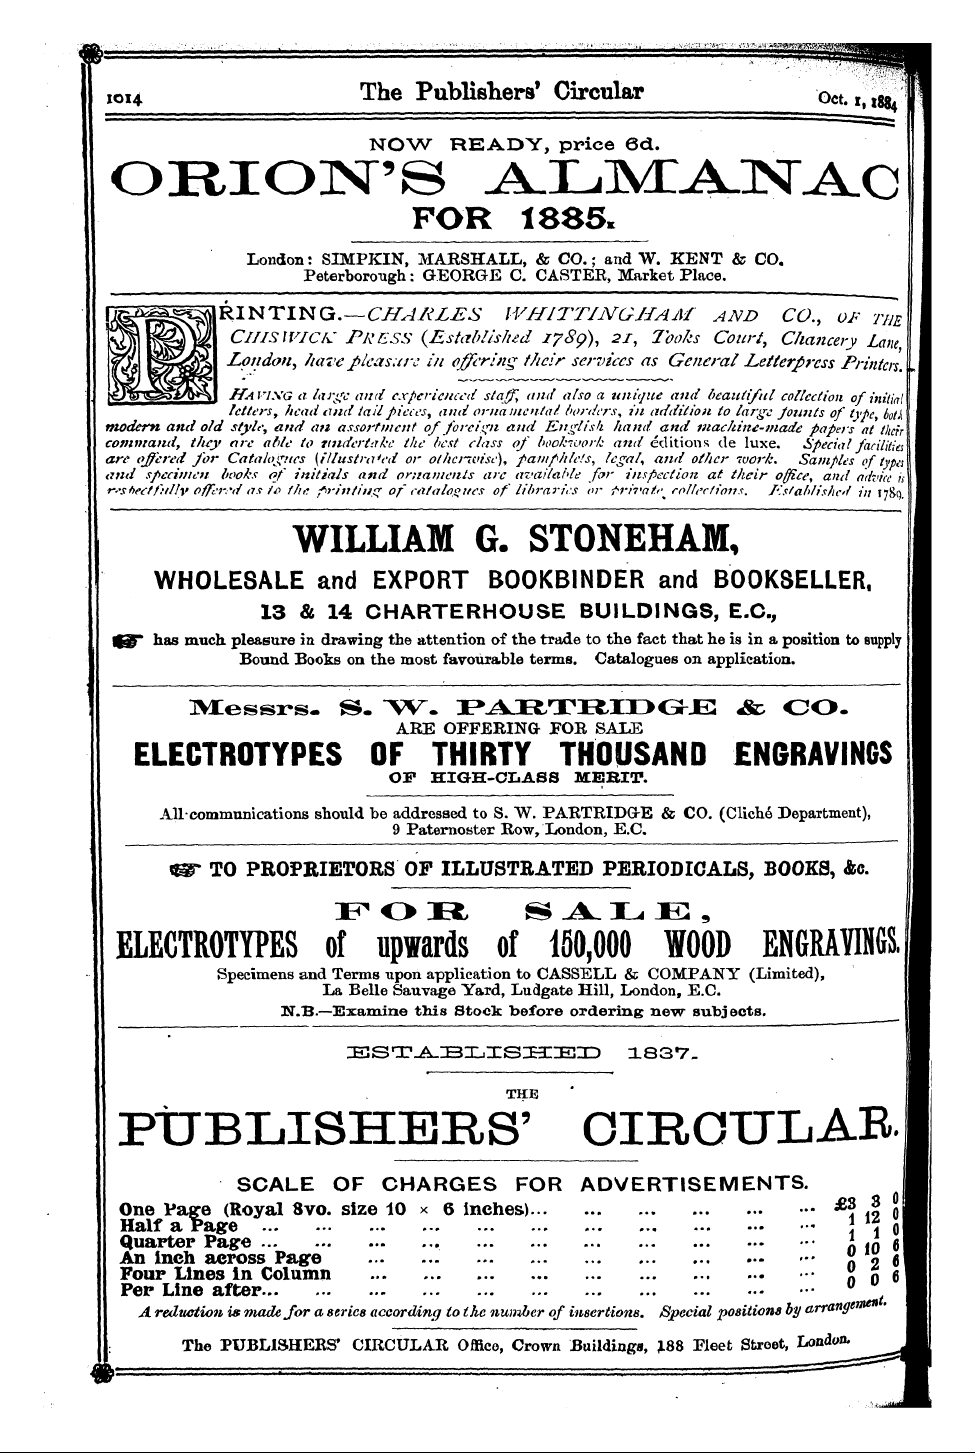 Publishers’ Circular (1880-1890): jS F Y, 1st edition: 118